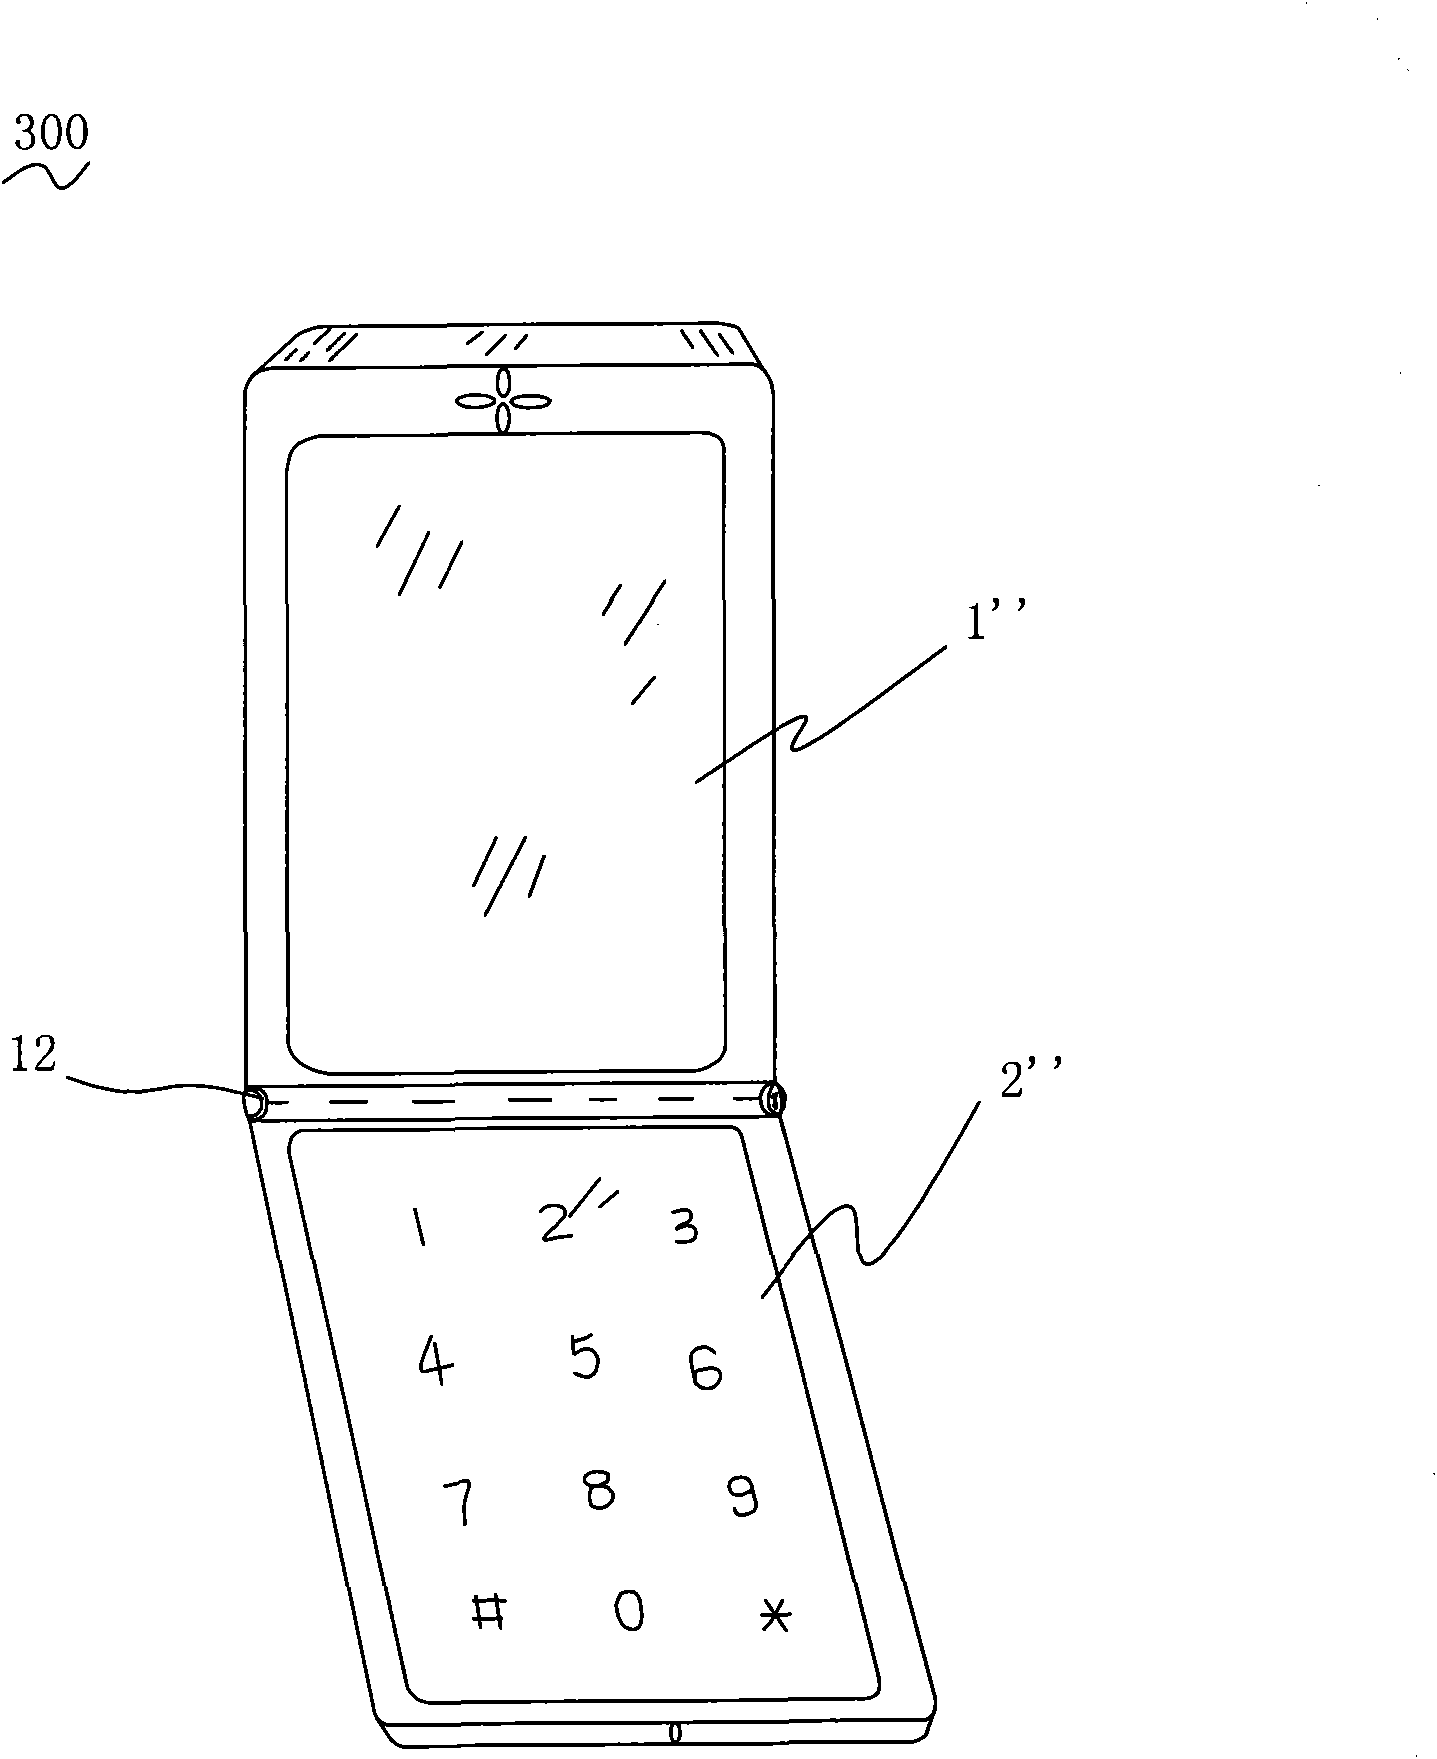 Split mobile communication device